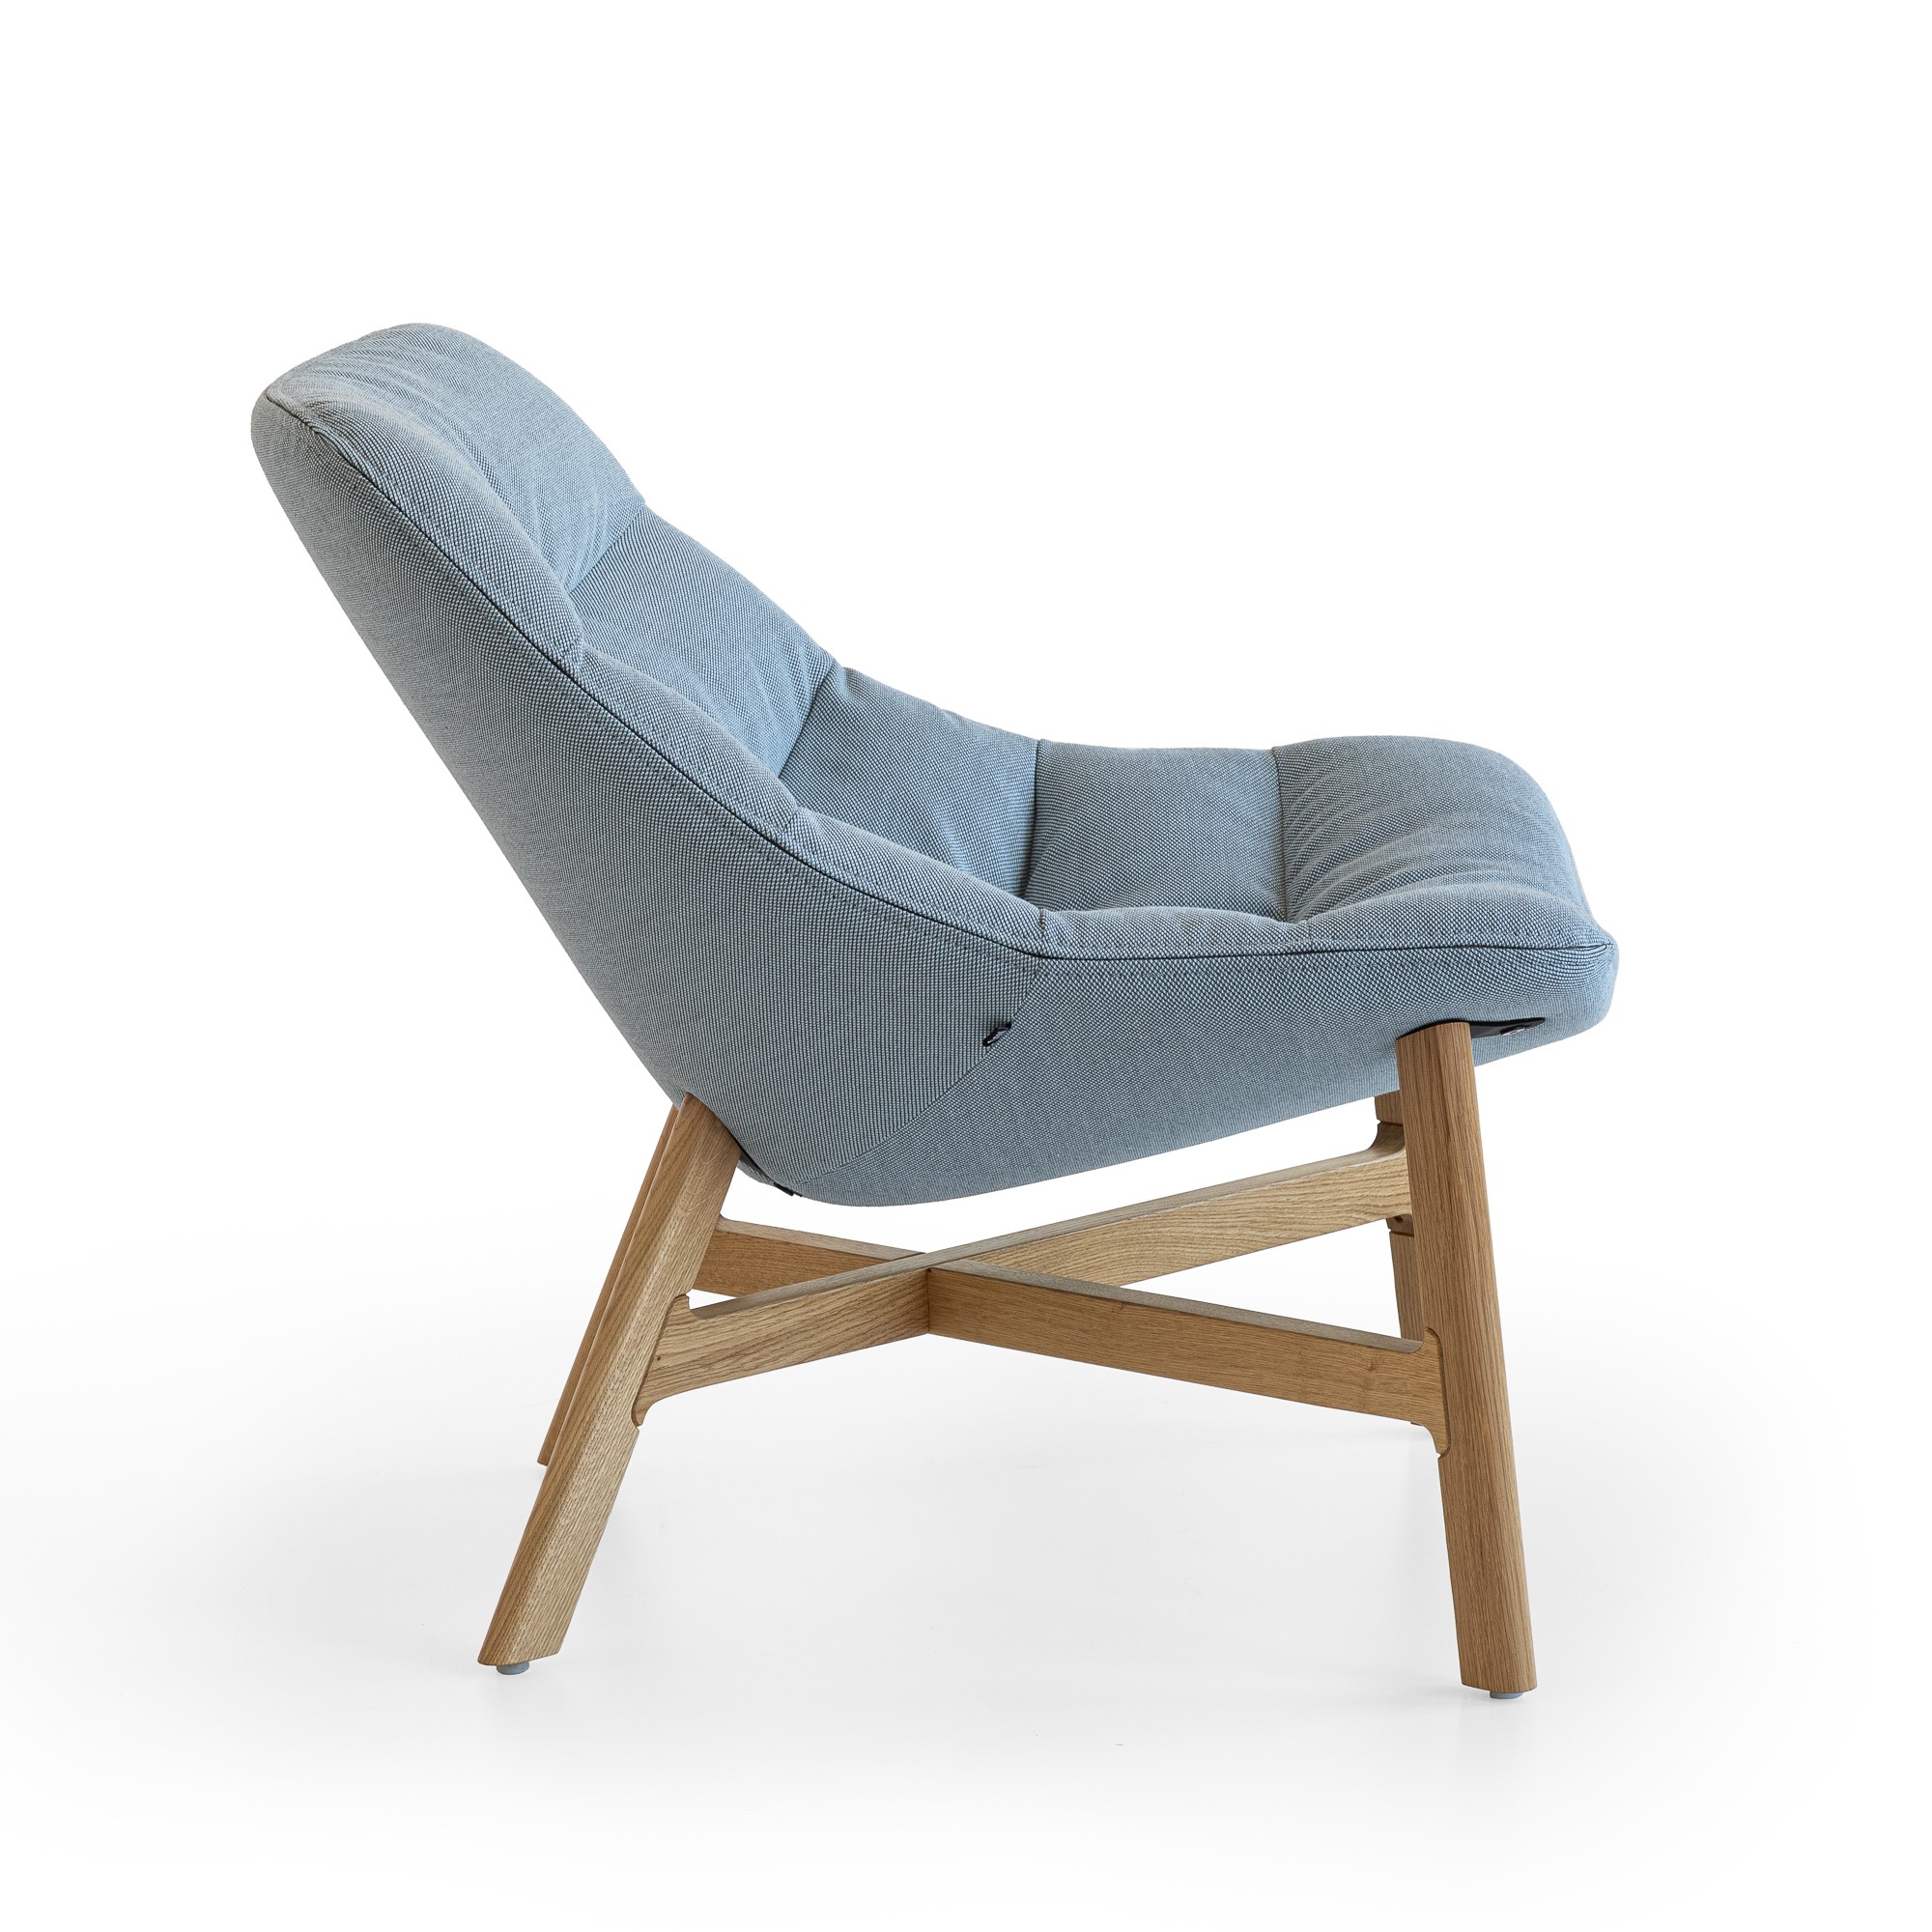 mishell soft armchair wooden legs3